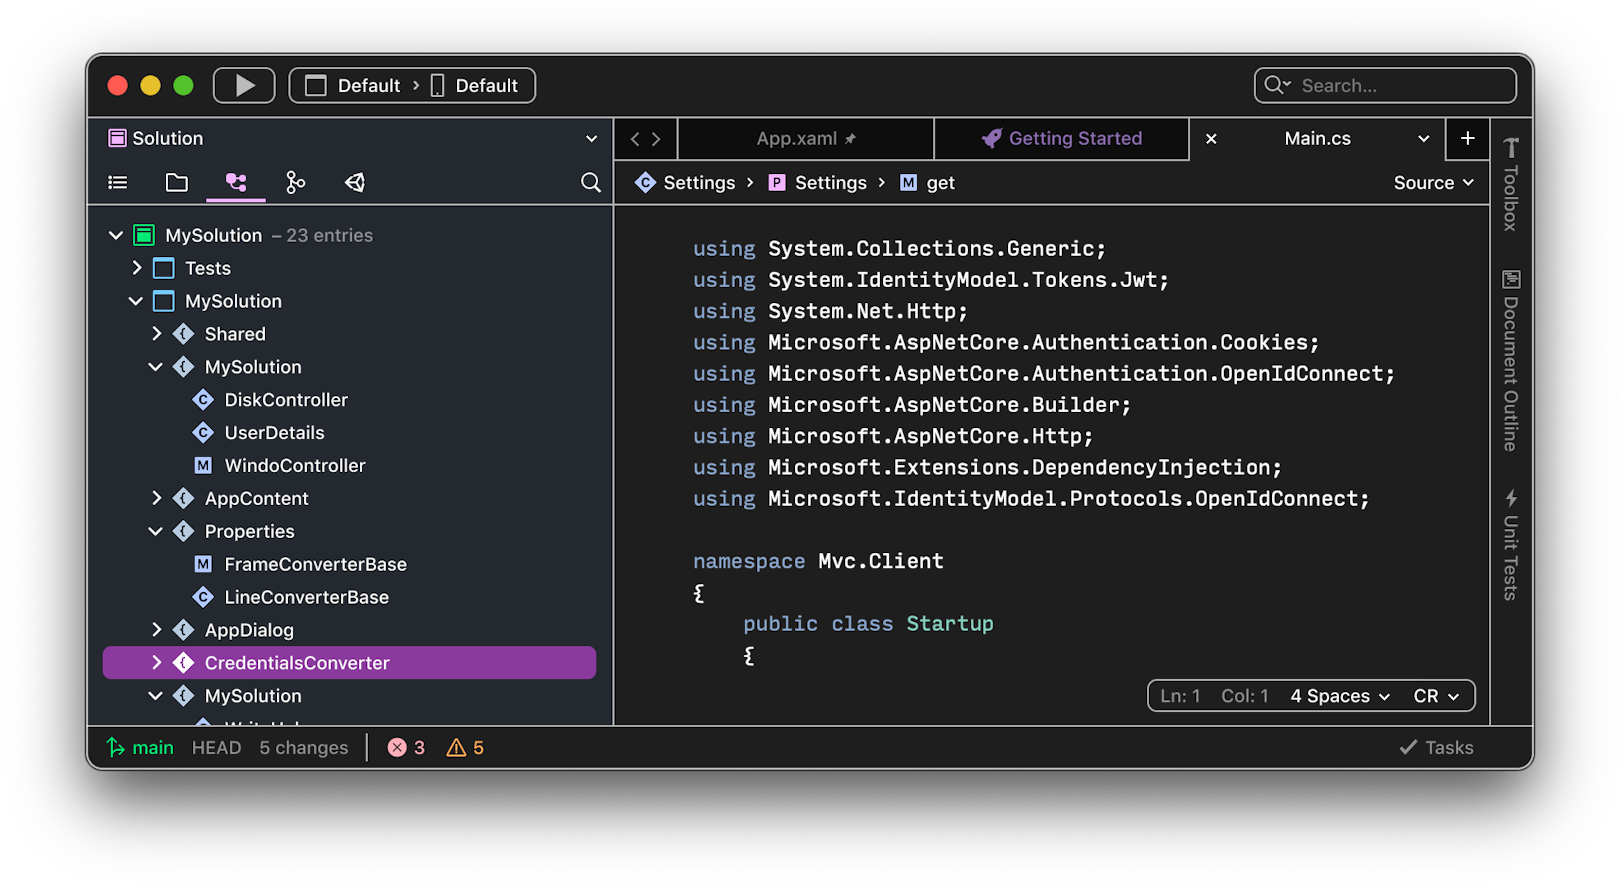 A screenshot showing Visual Studio for Mac 17 in the high contrast dark theme.